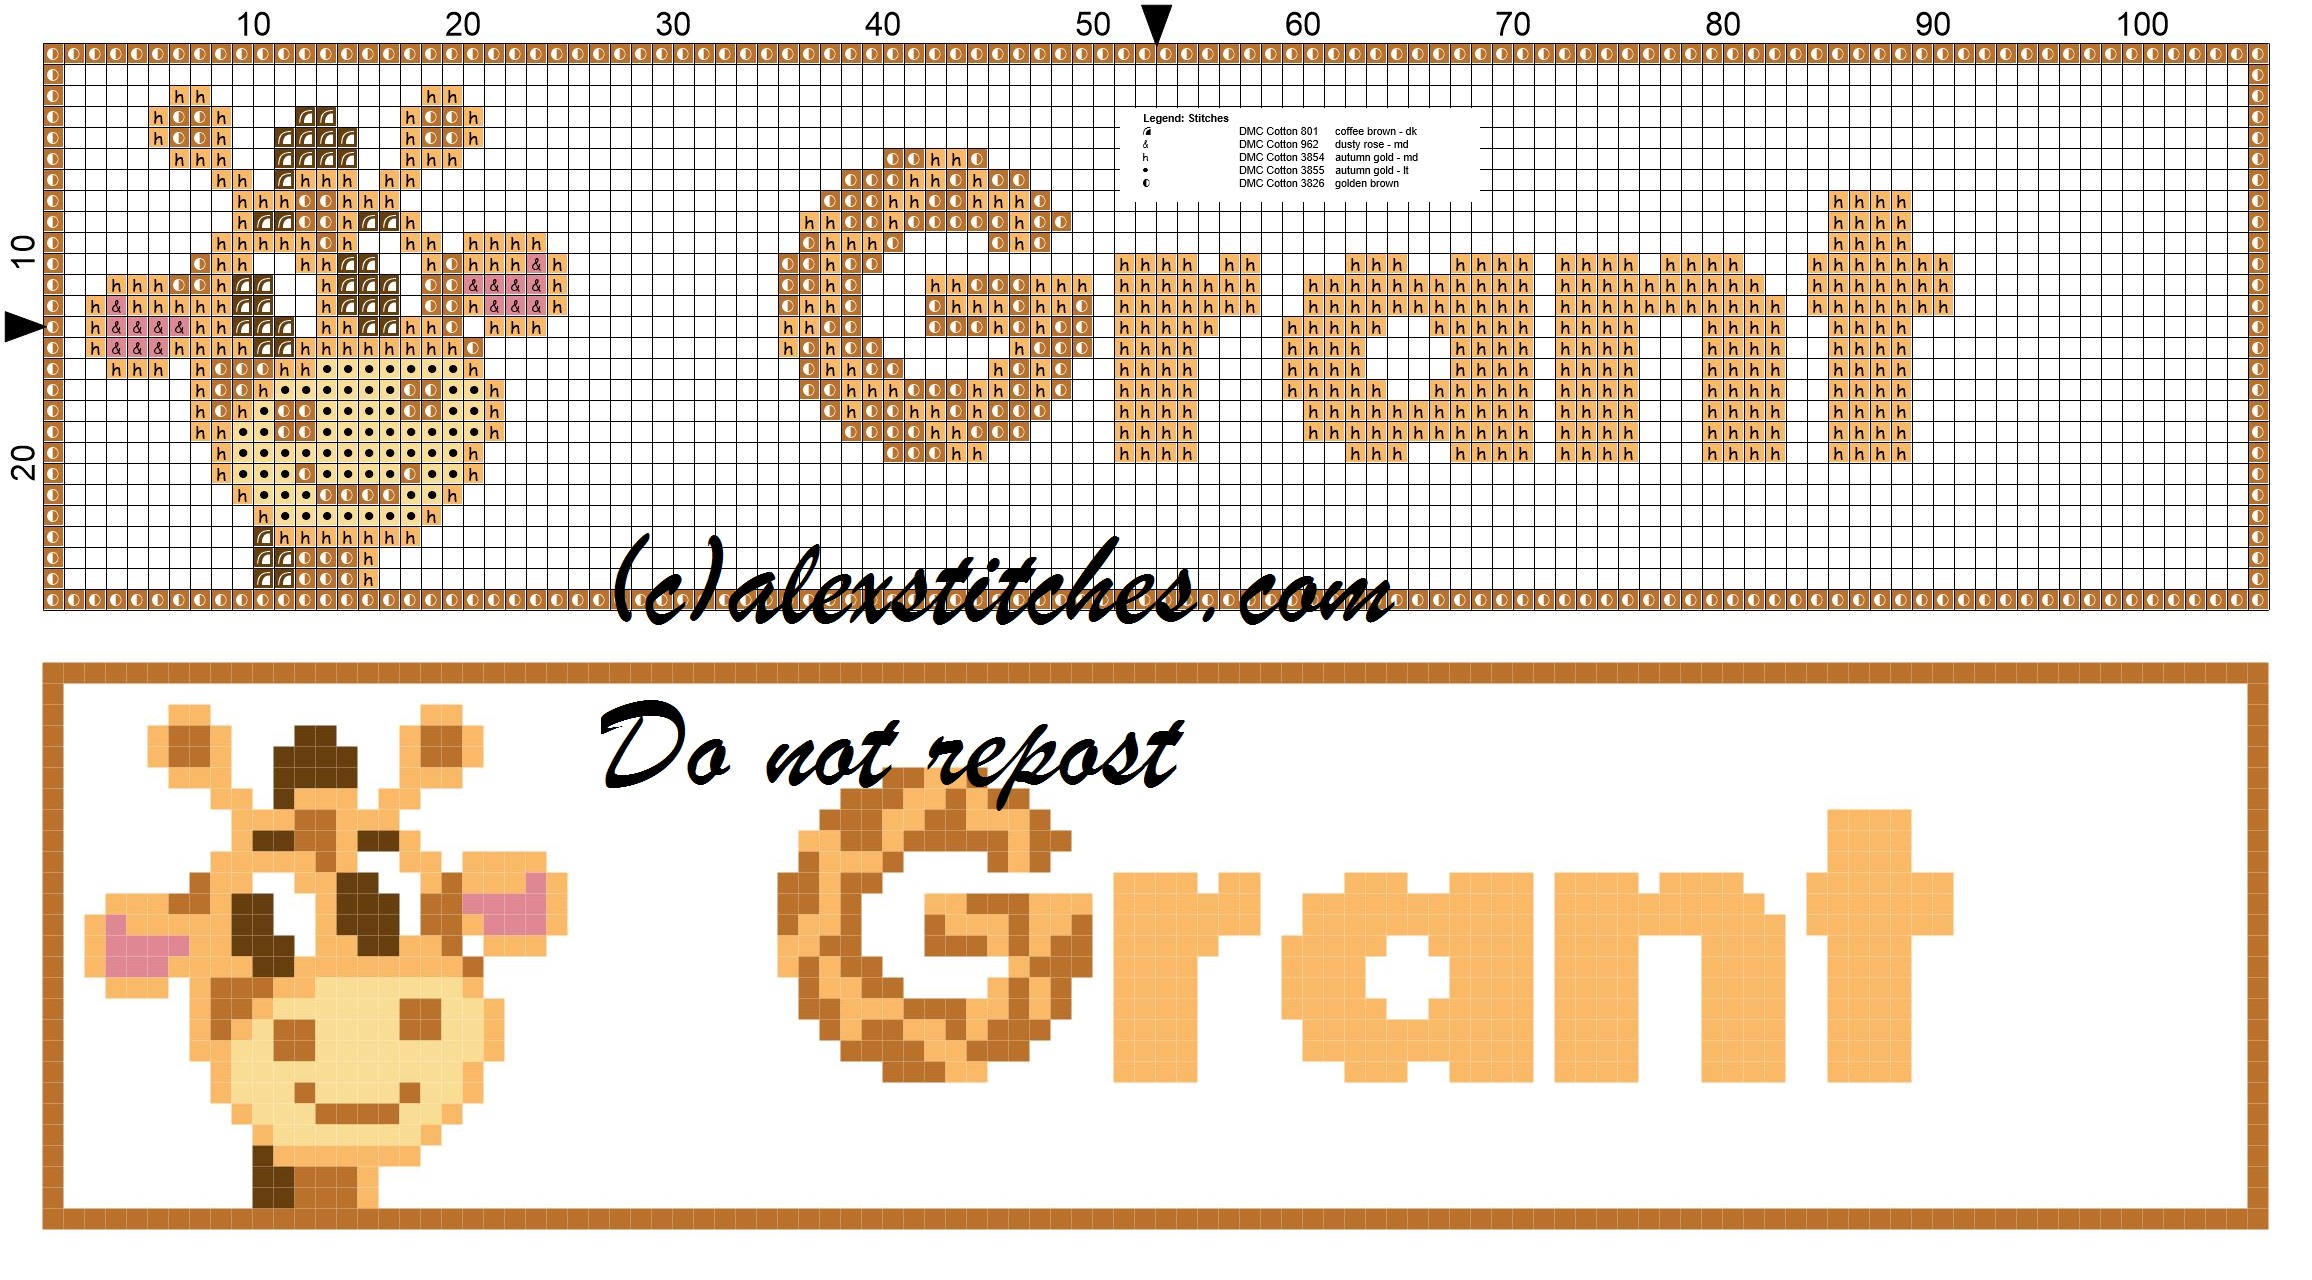 Grant name with giraffe cross stitch pattern